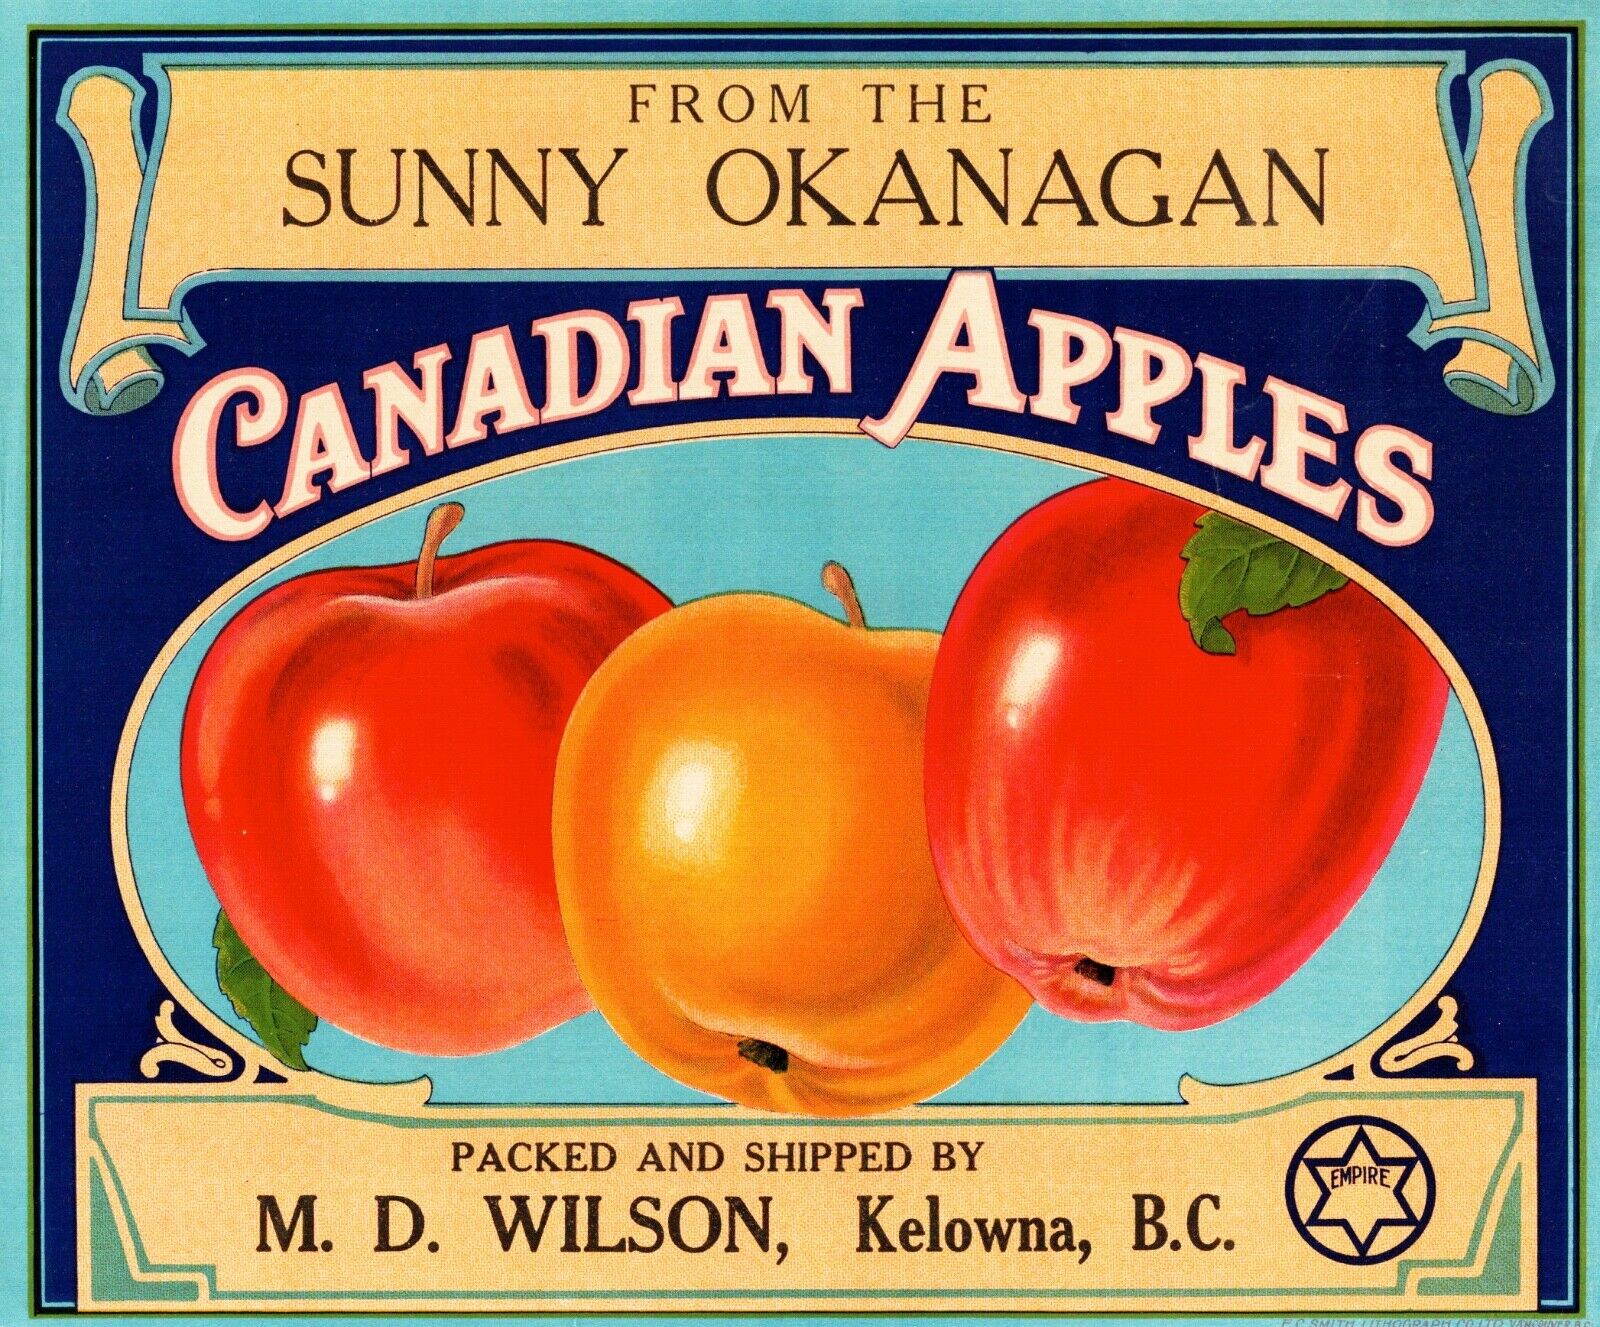 1 SUNNY OKANAGAN Brand Original Canadian Apple Fruit Crate Label Kelowna, B.C.